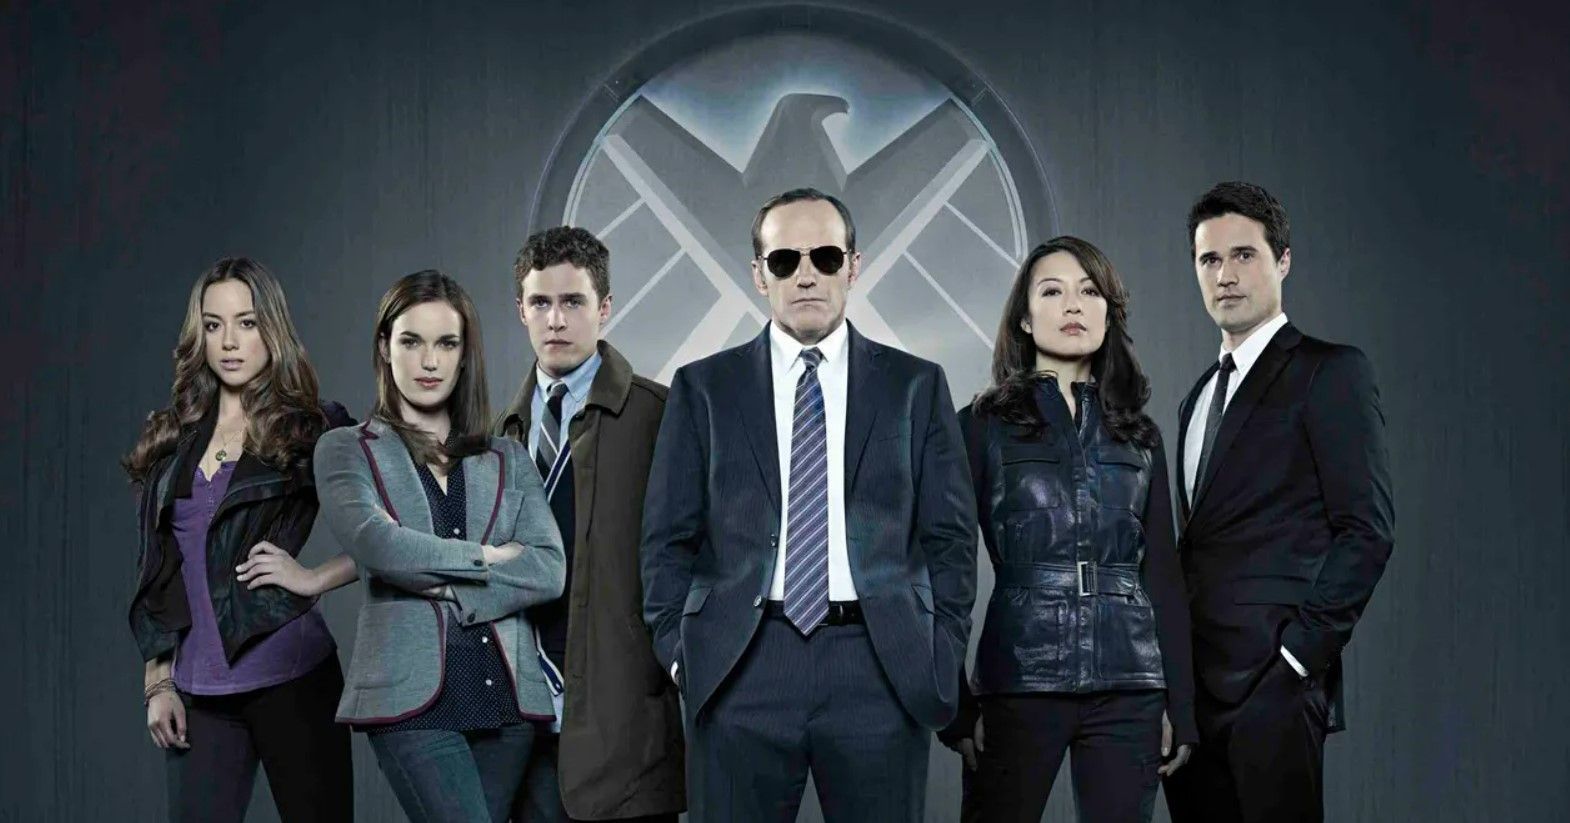 Agents of SHIELD season 1 